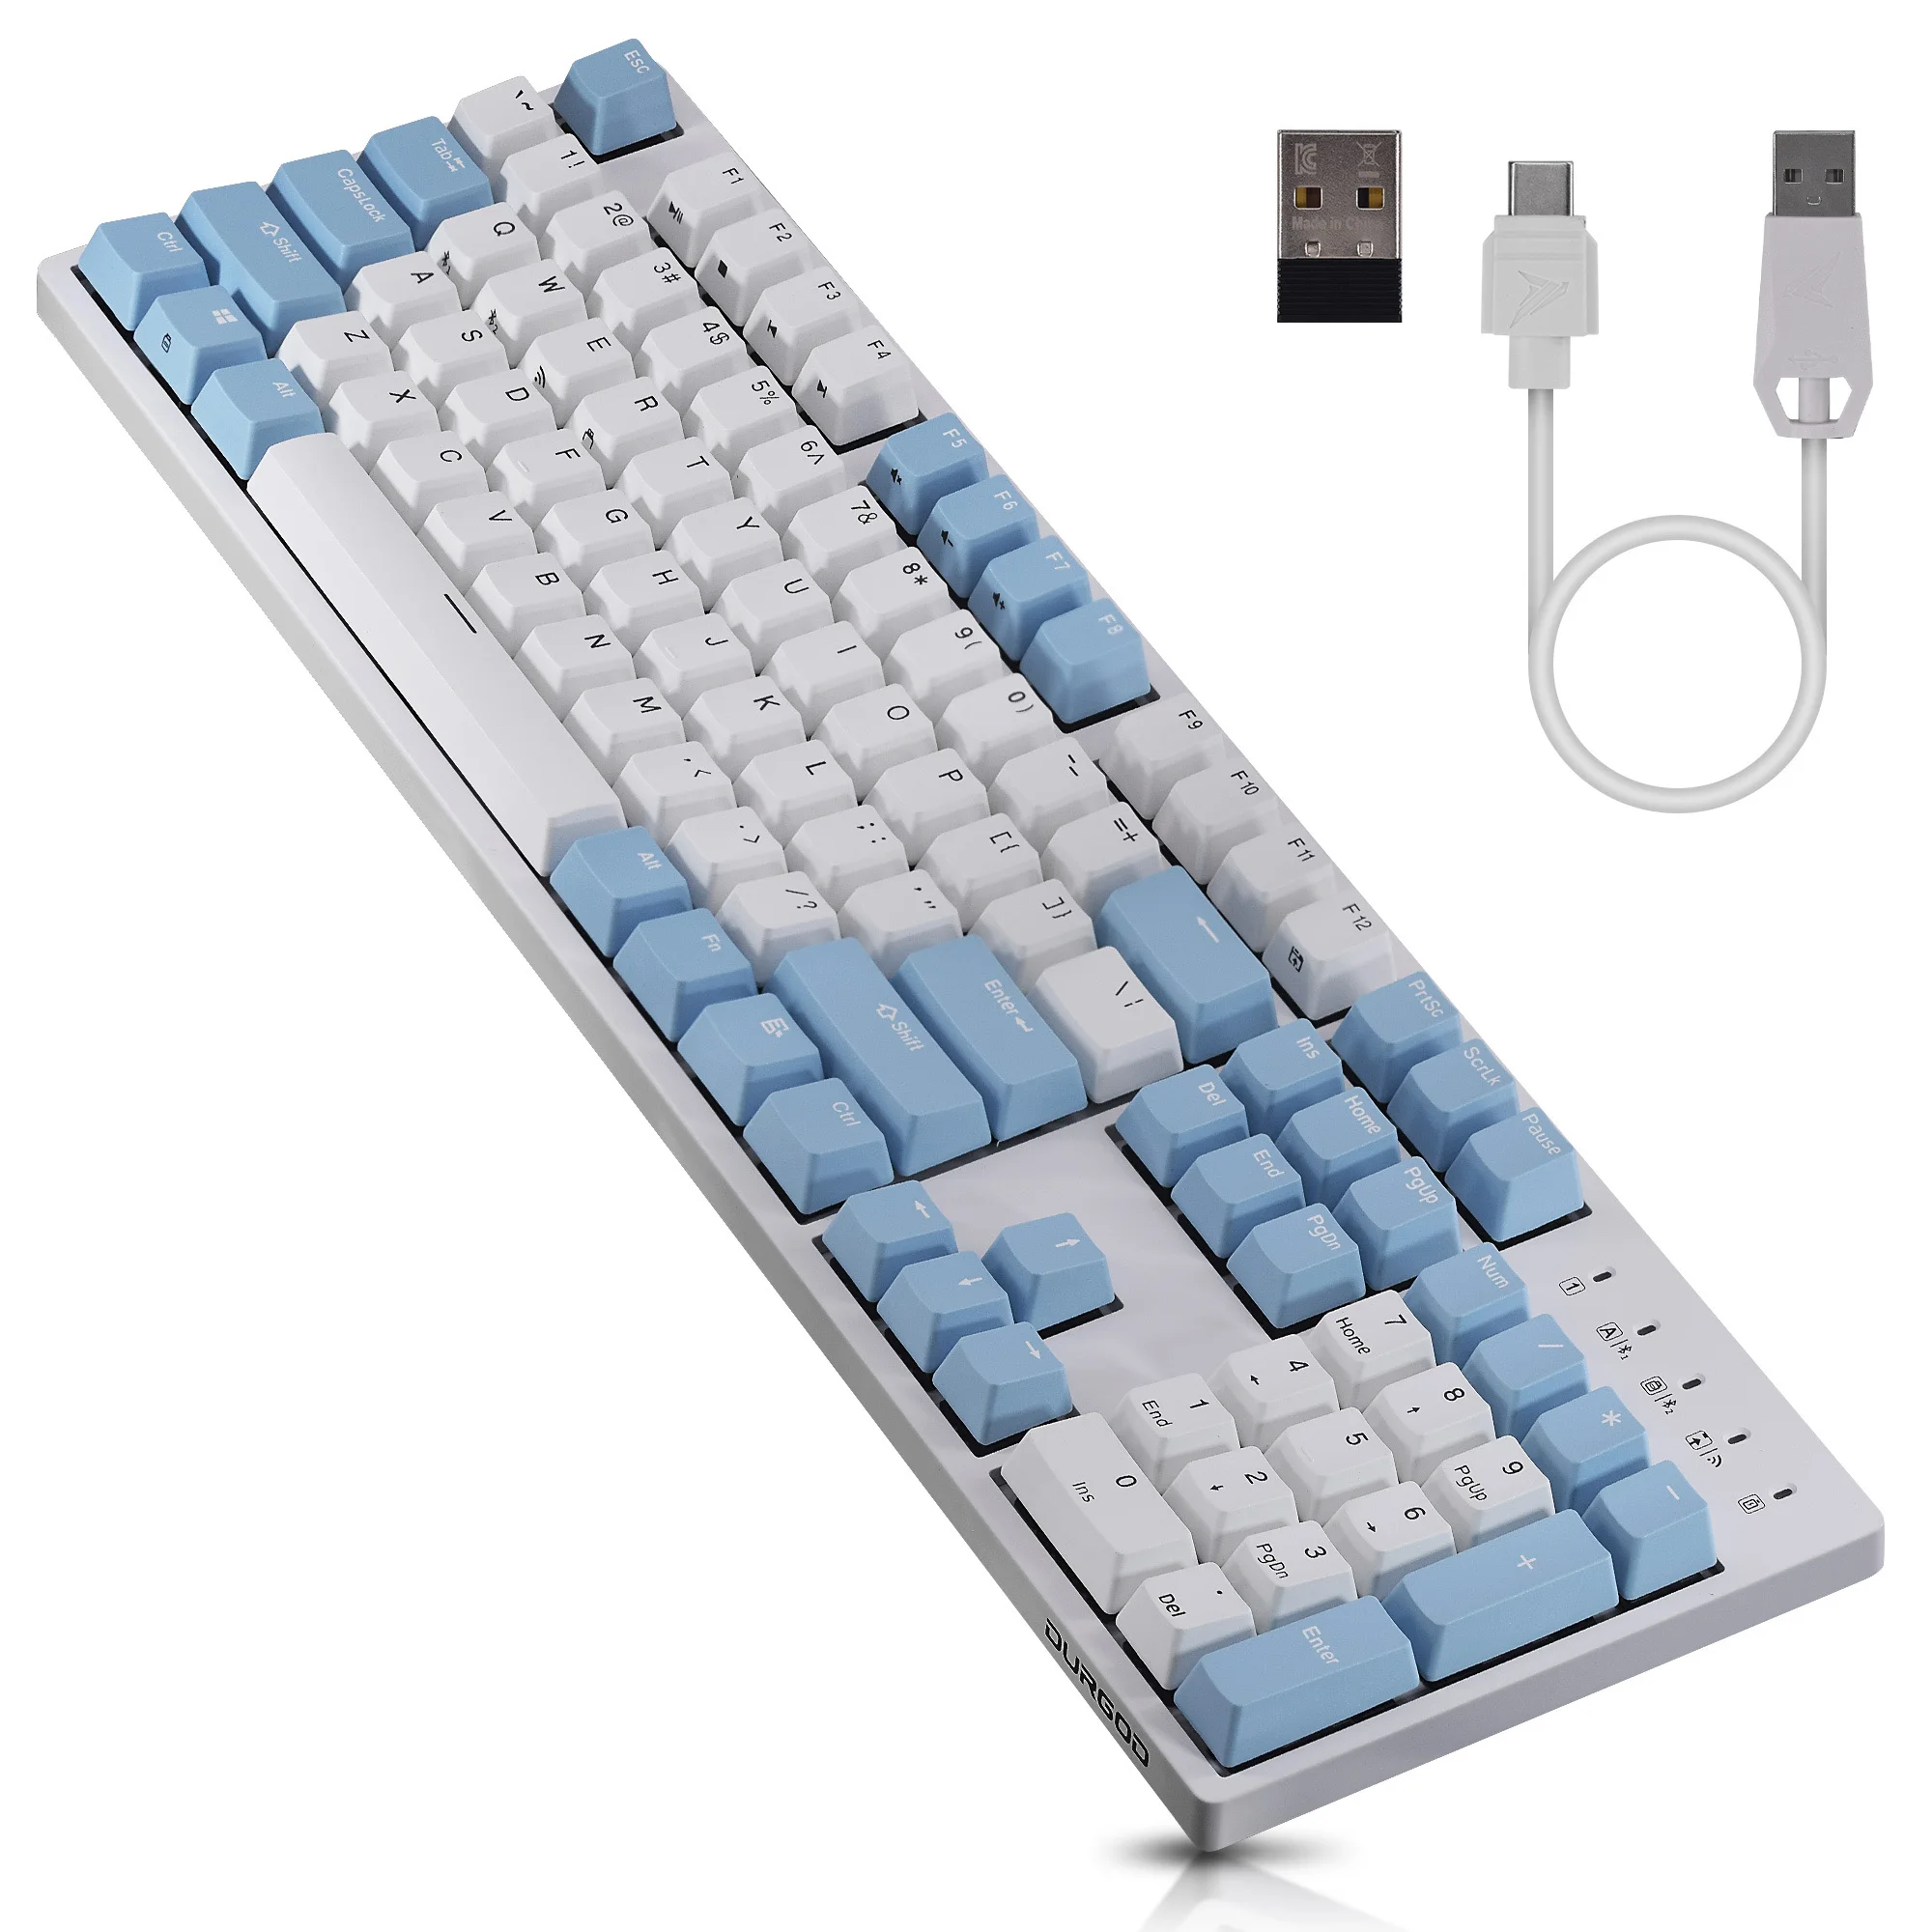 Durgod K310W Mechanical Keyboard Wireless Bluetooth Three -mode 104-key Cherry MX Switch Gaming Keyboard